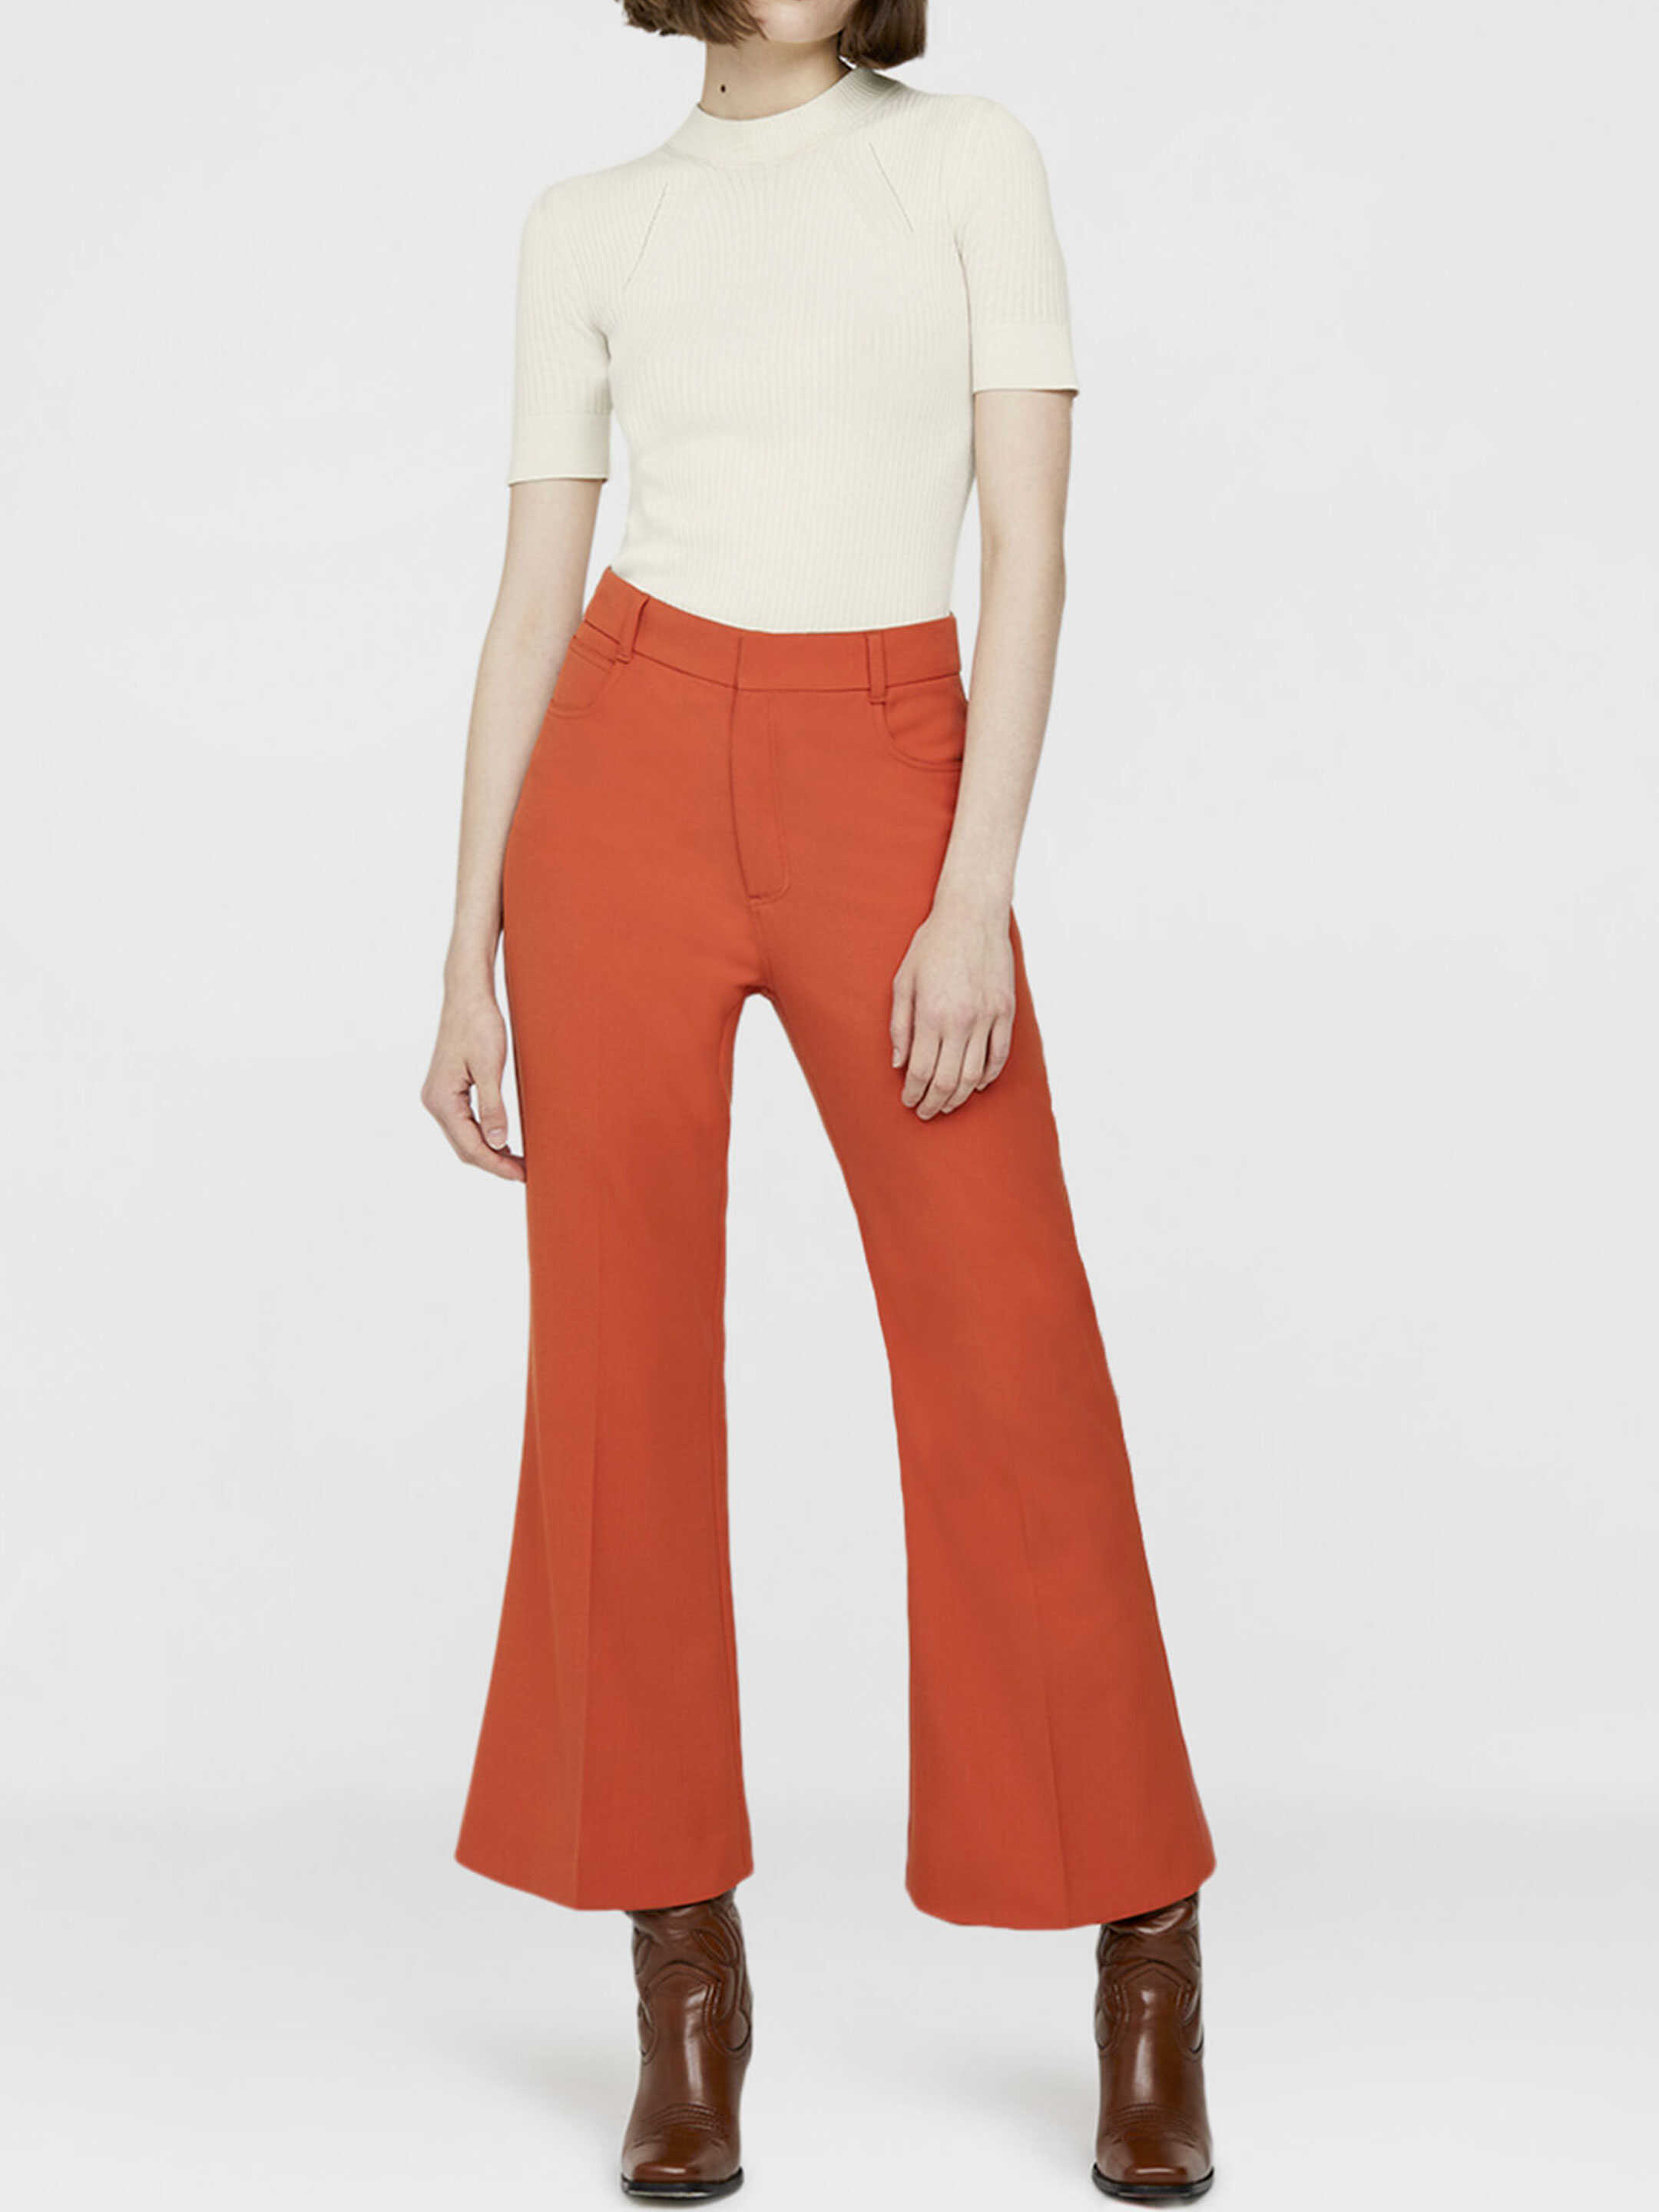 Stella McCartney Tailored Trousers Orange image